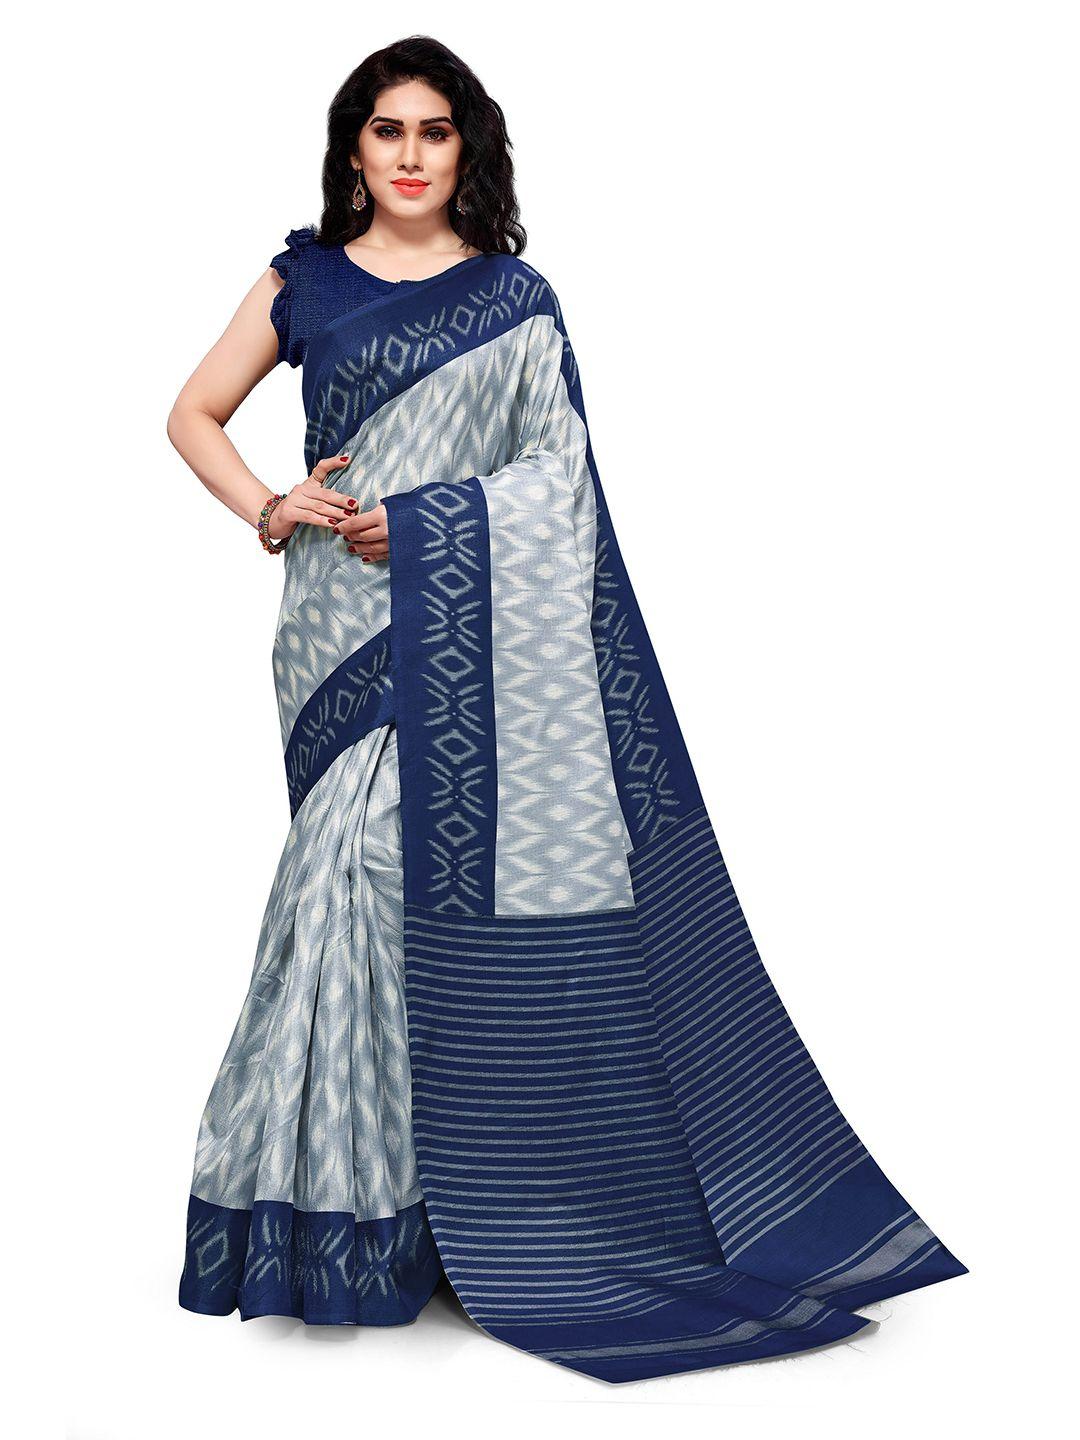 kalini off white & navy blue ethnic motifs art silk ikat saree